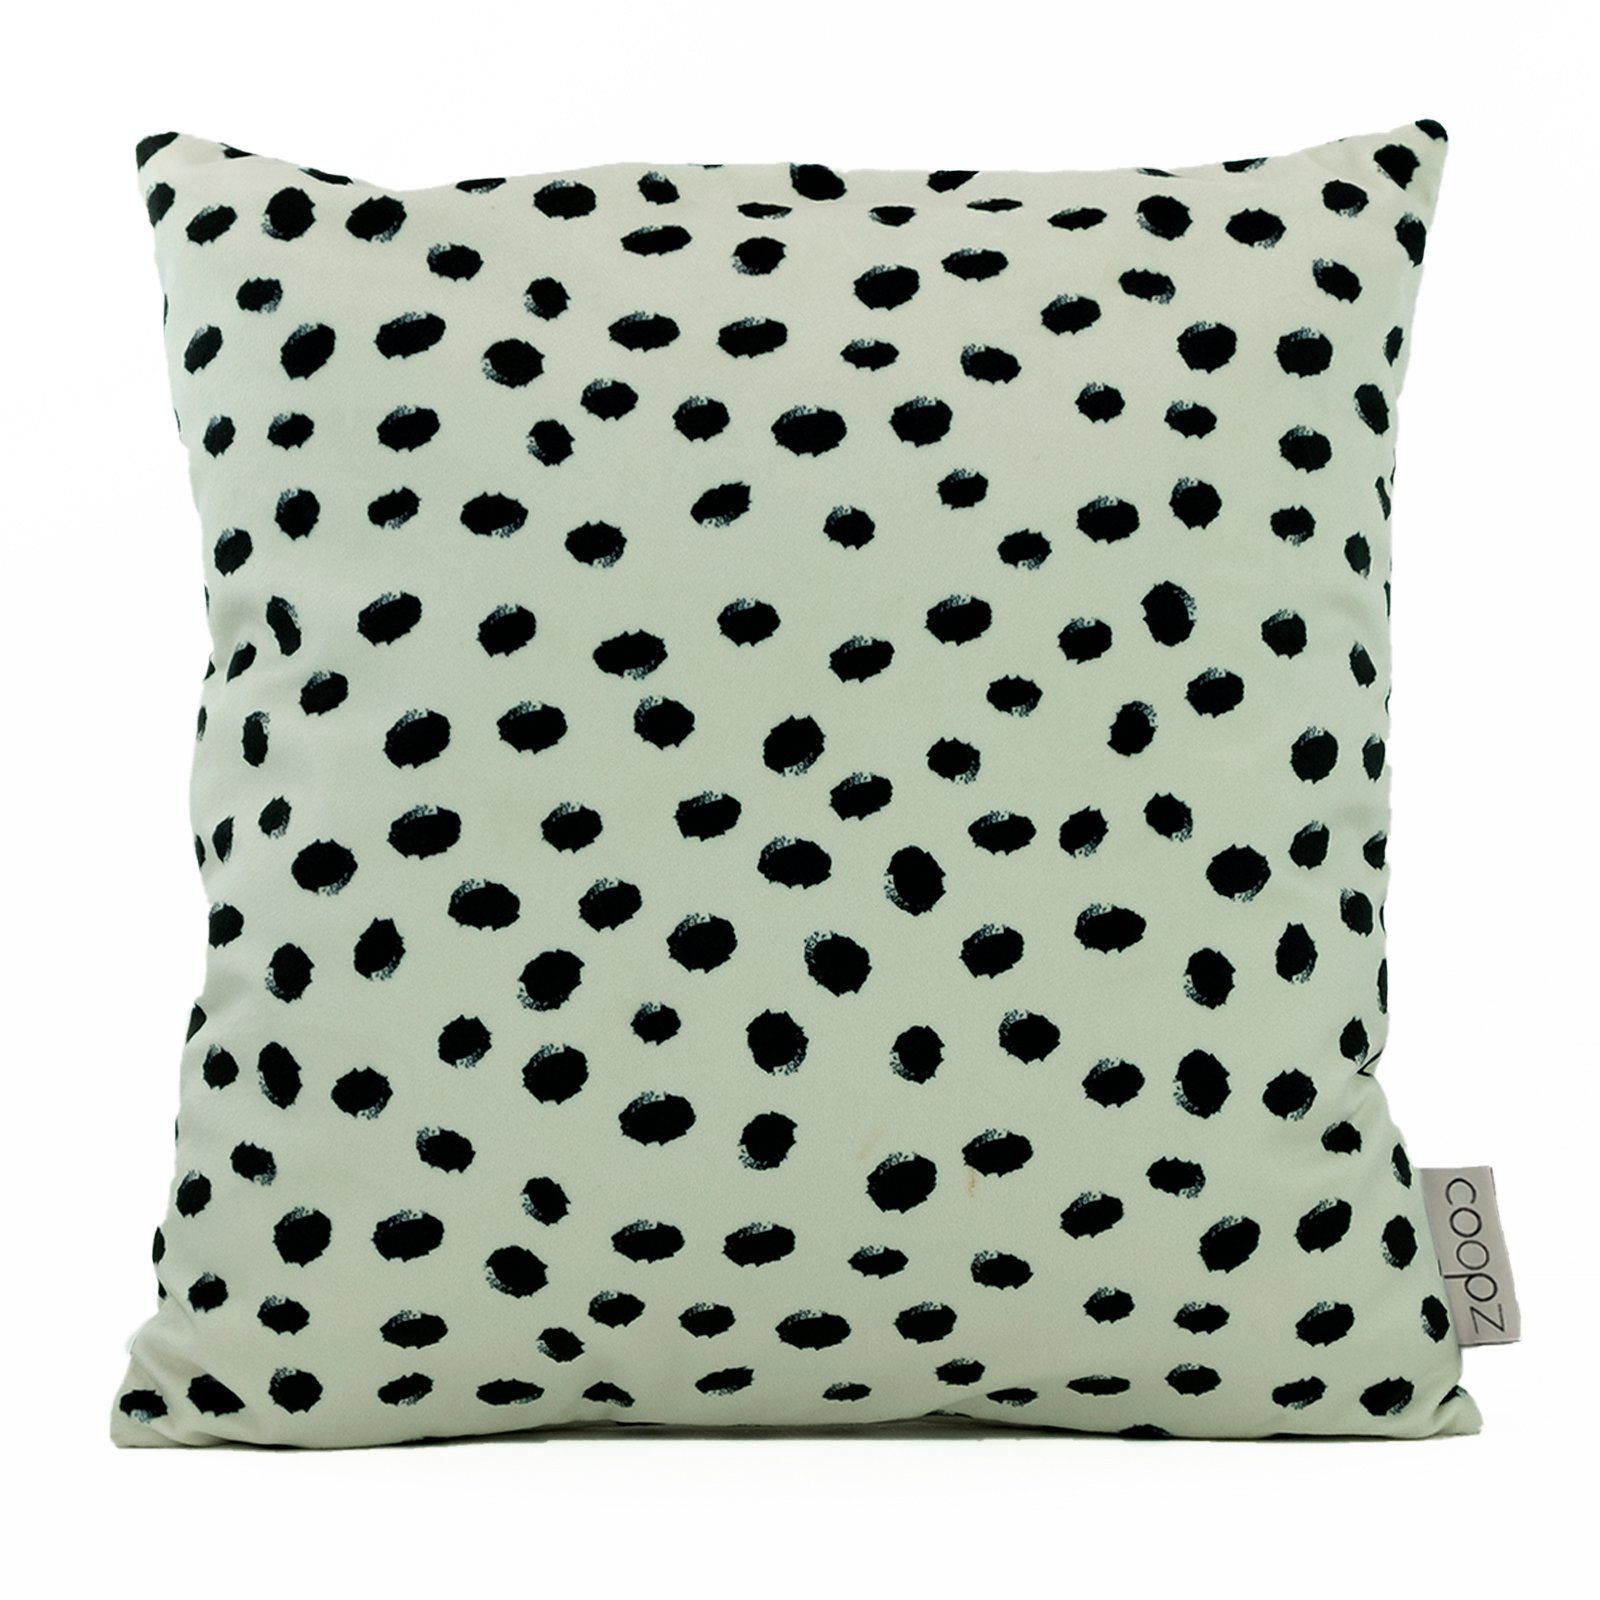 Dots white coopz Grafik, coopz Handmade Punkte Velvet nature Kissenbezug Cheetah Kissenbezug UV-beständig Samt